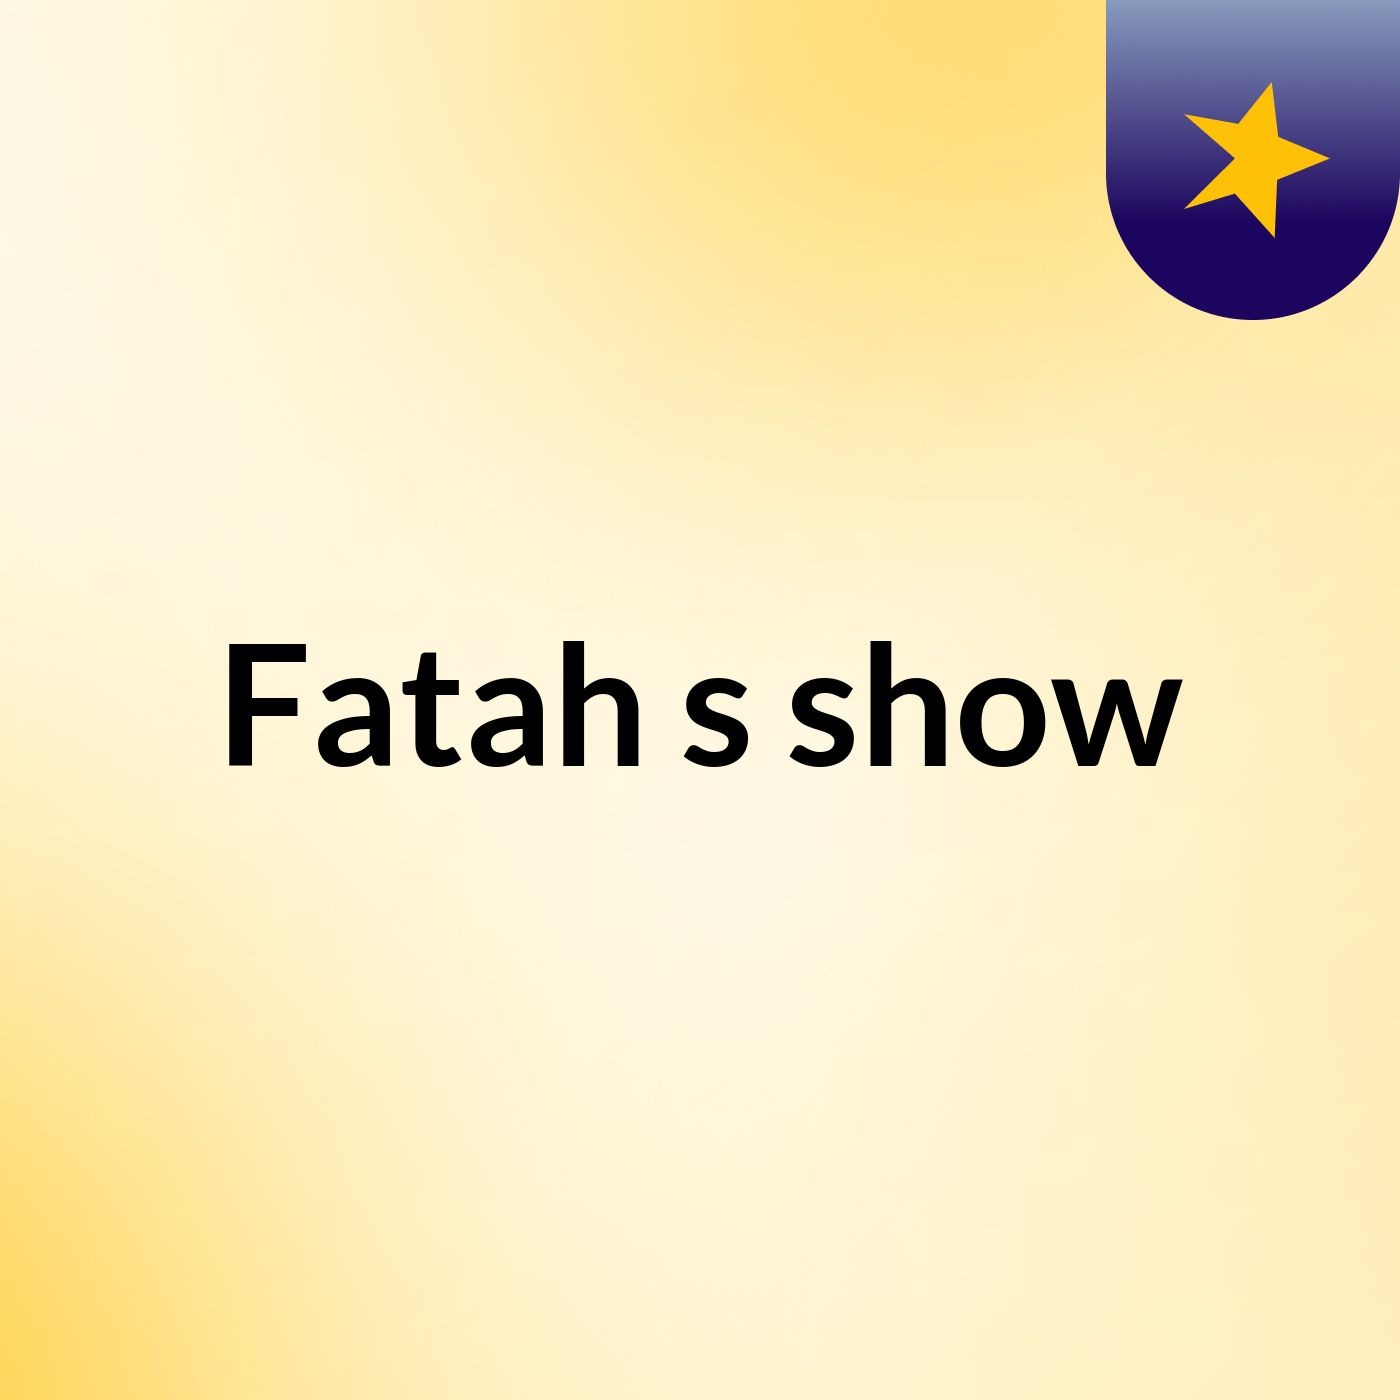 Fatah's show